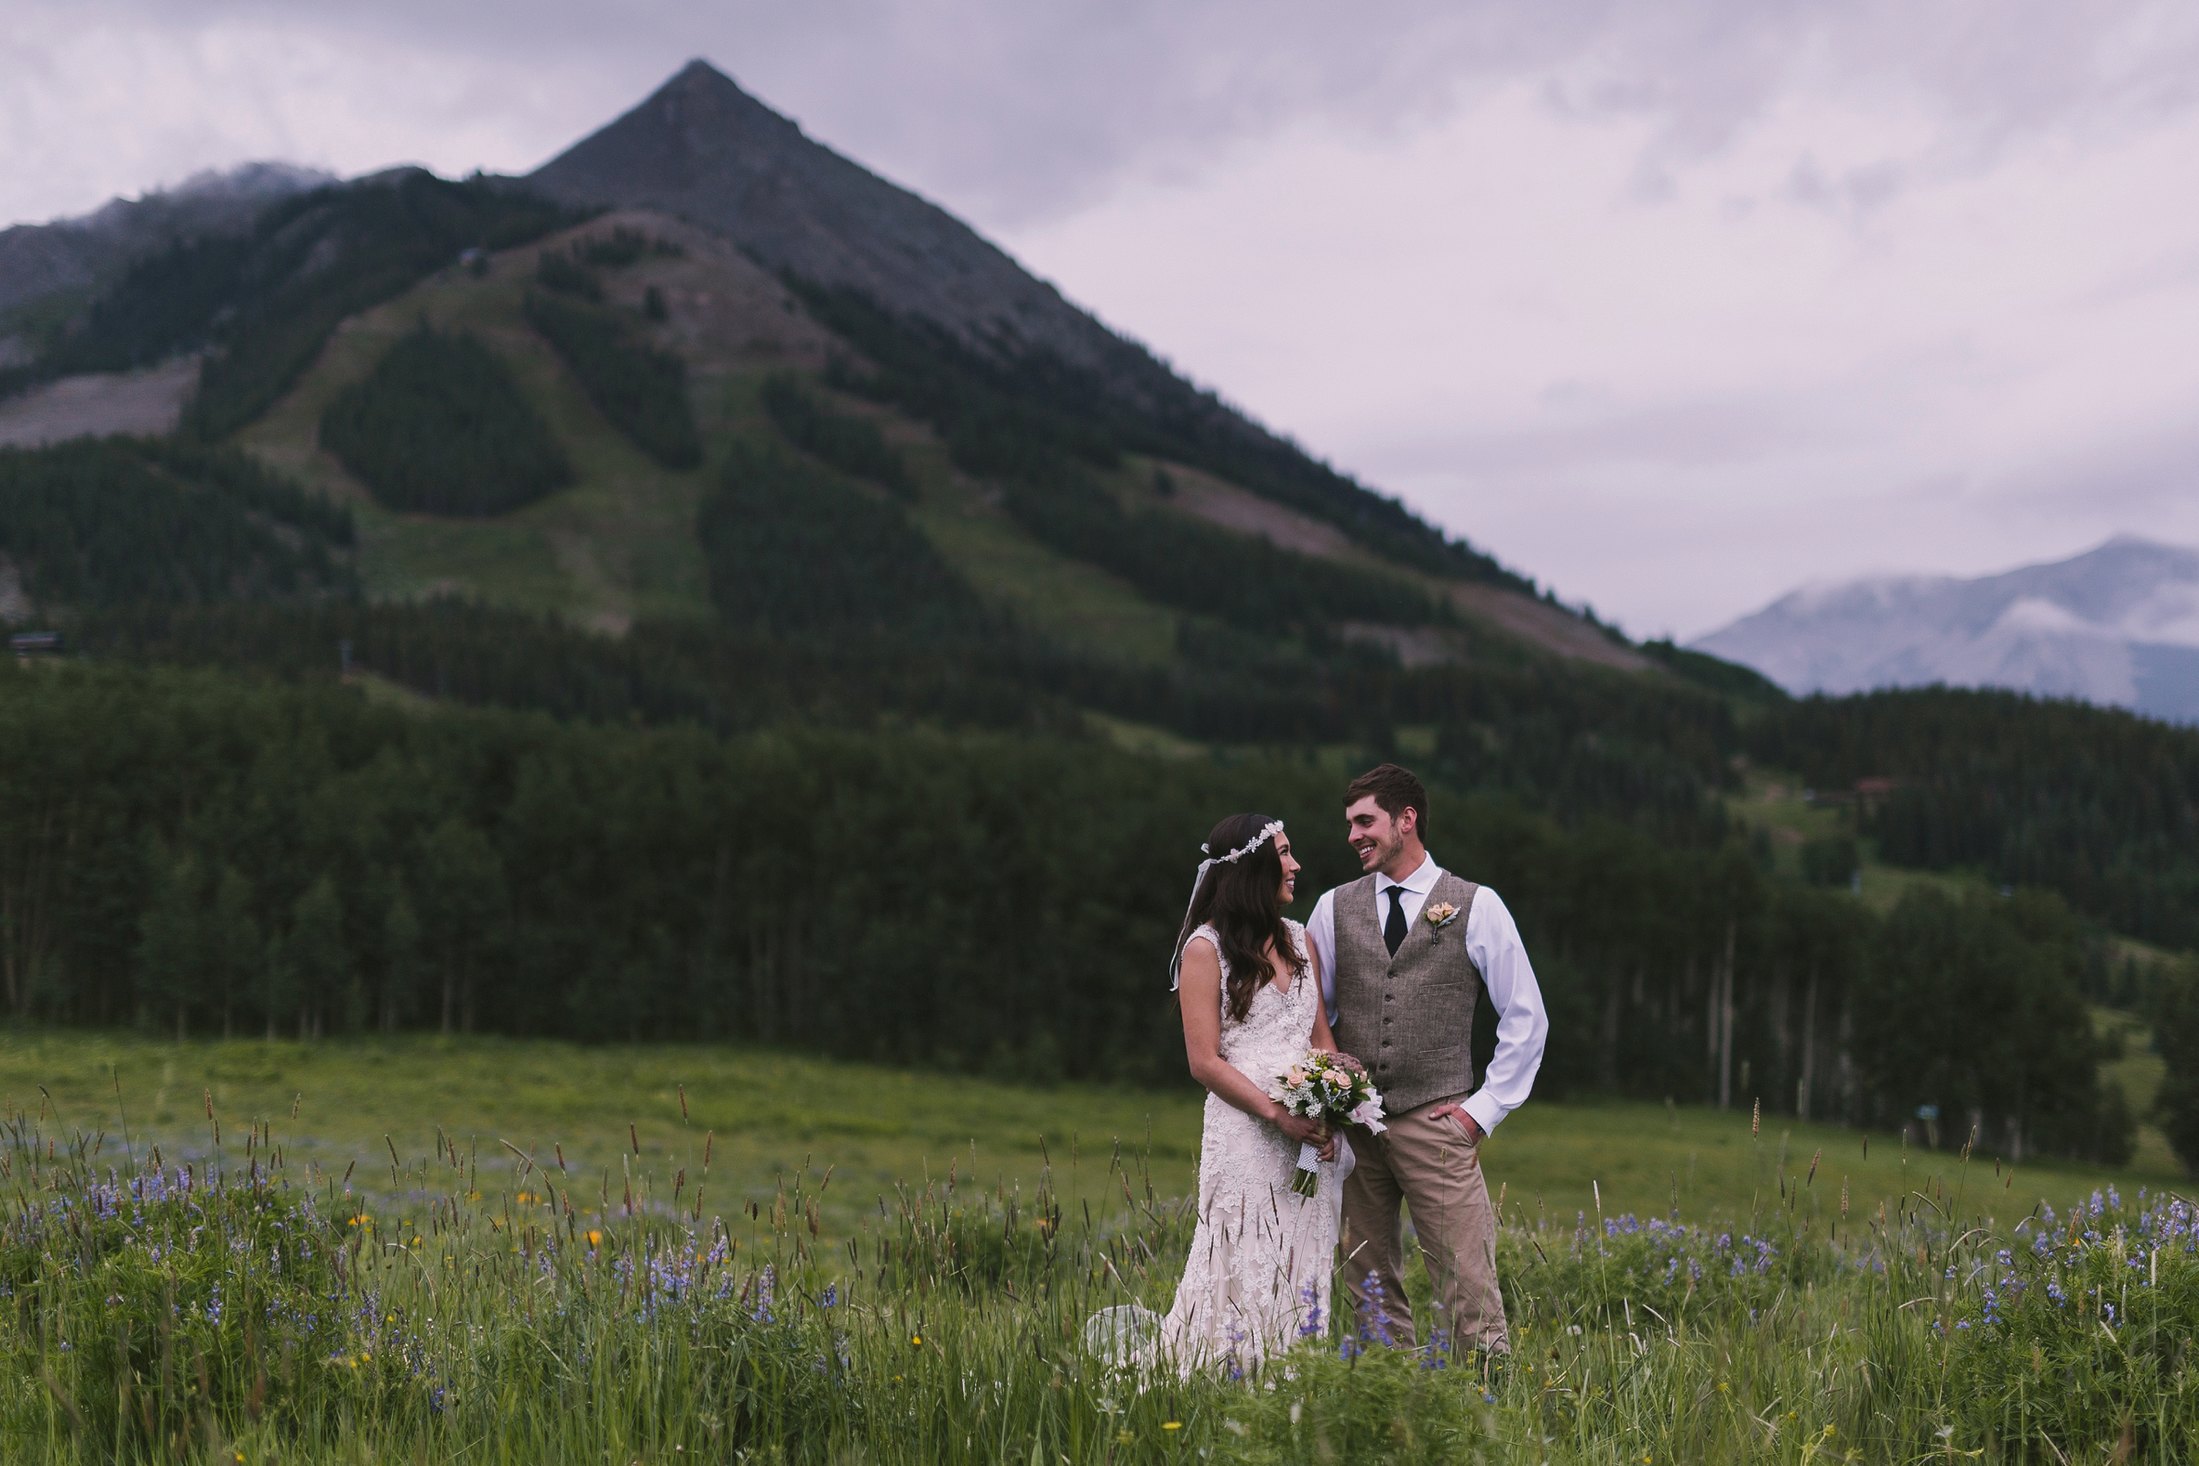 Crested Butte Mountain Resort wedding at Ten peaks